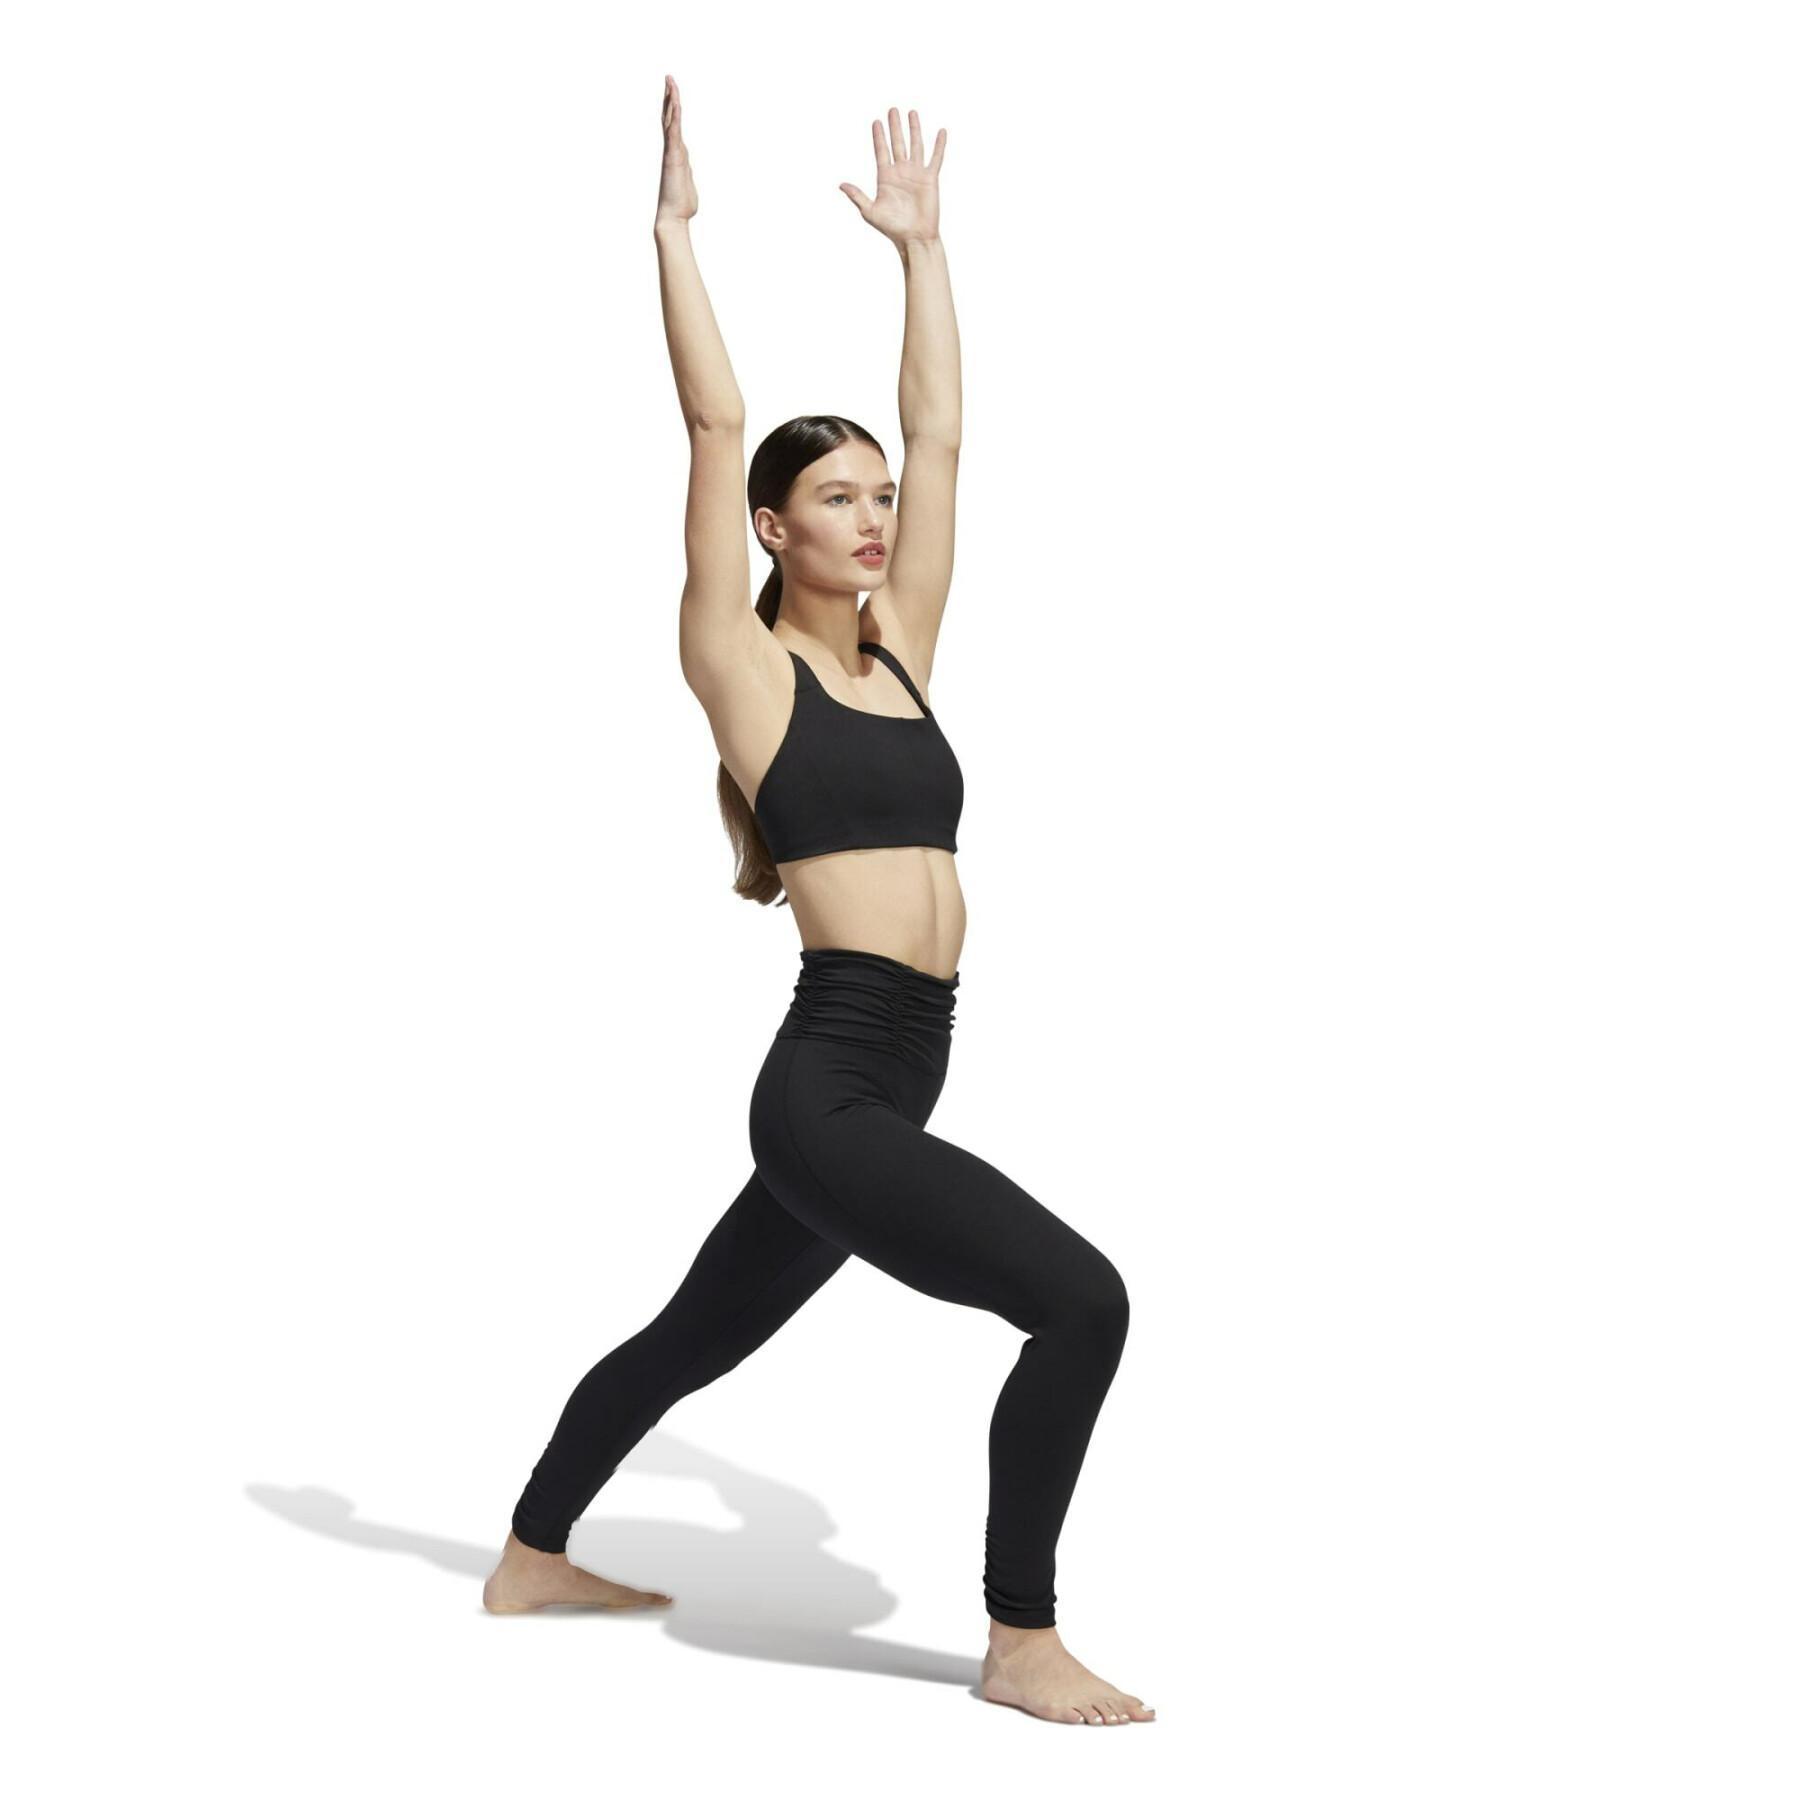 Legging woman adidas 70 Yoga Studio Gathered